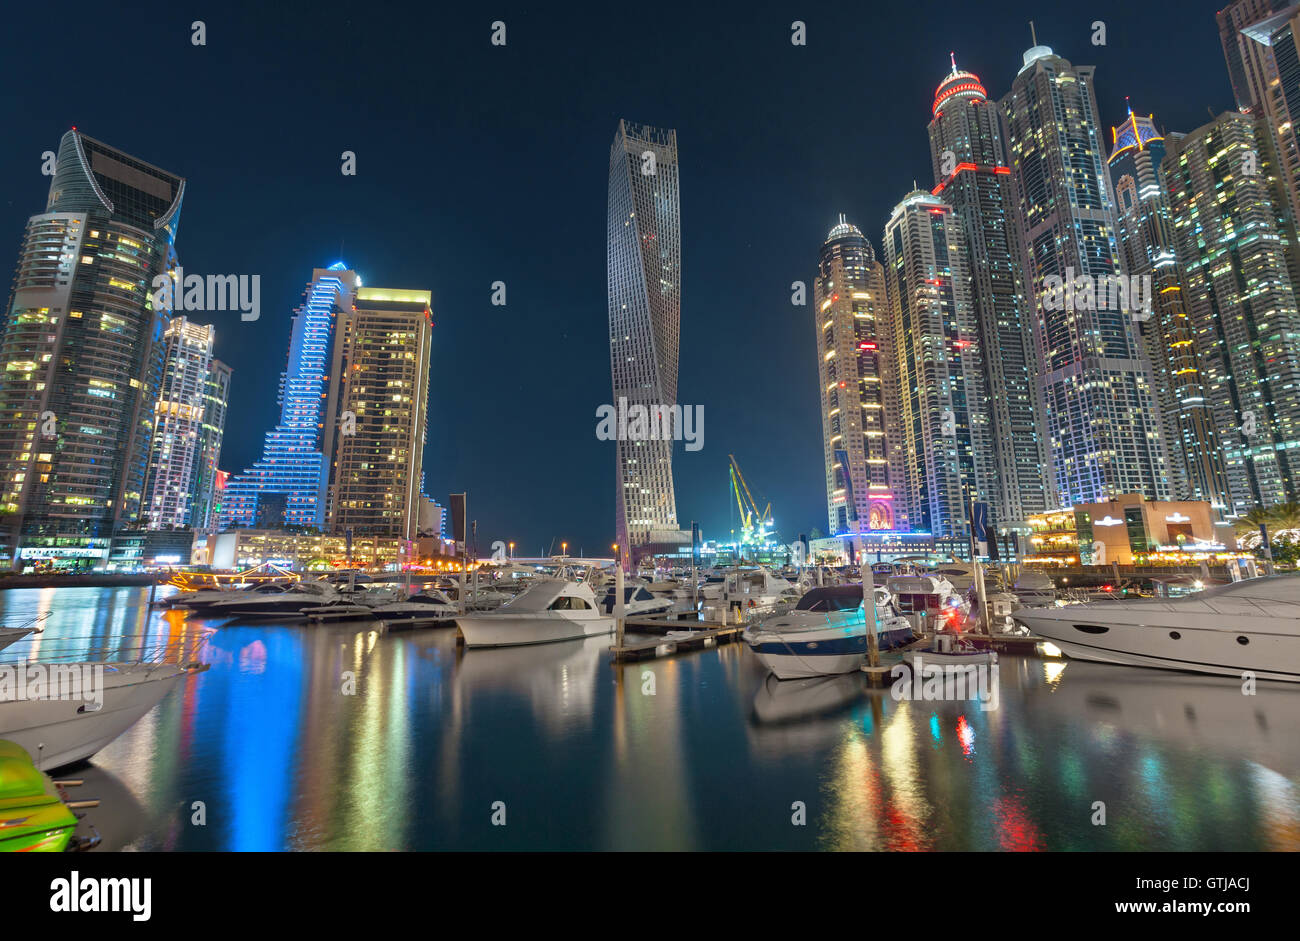 Dubai Marina Lights with Beautiful Skyline Reflection on Water at Night Stock Photo